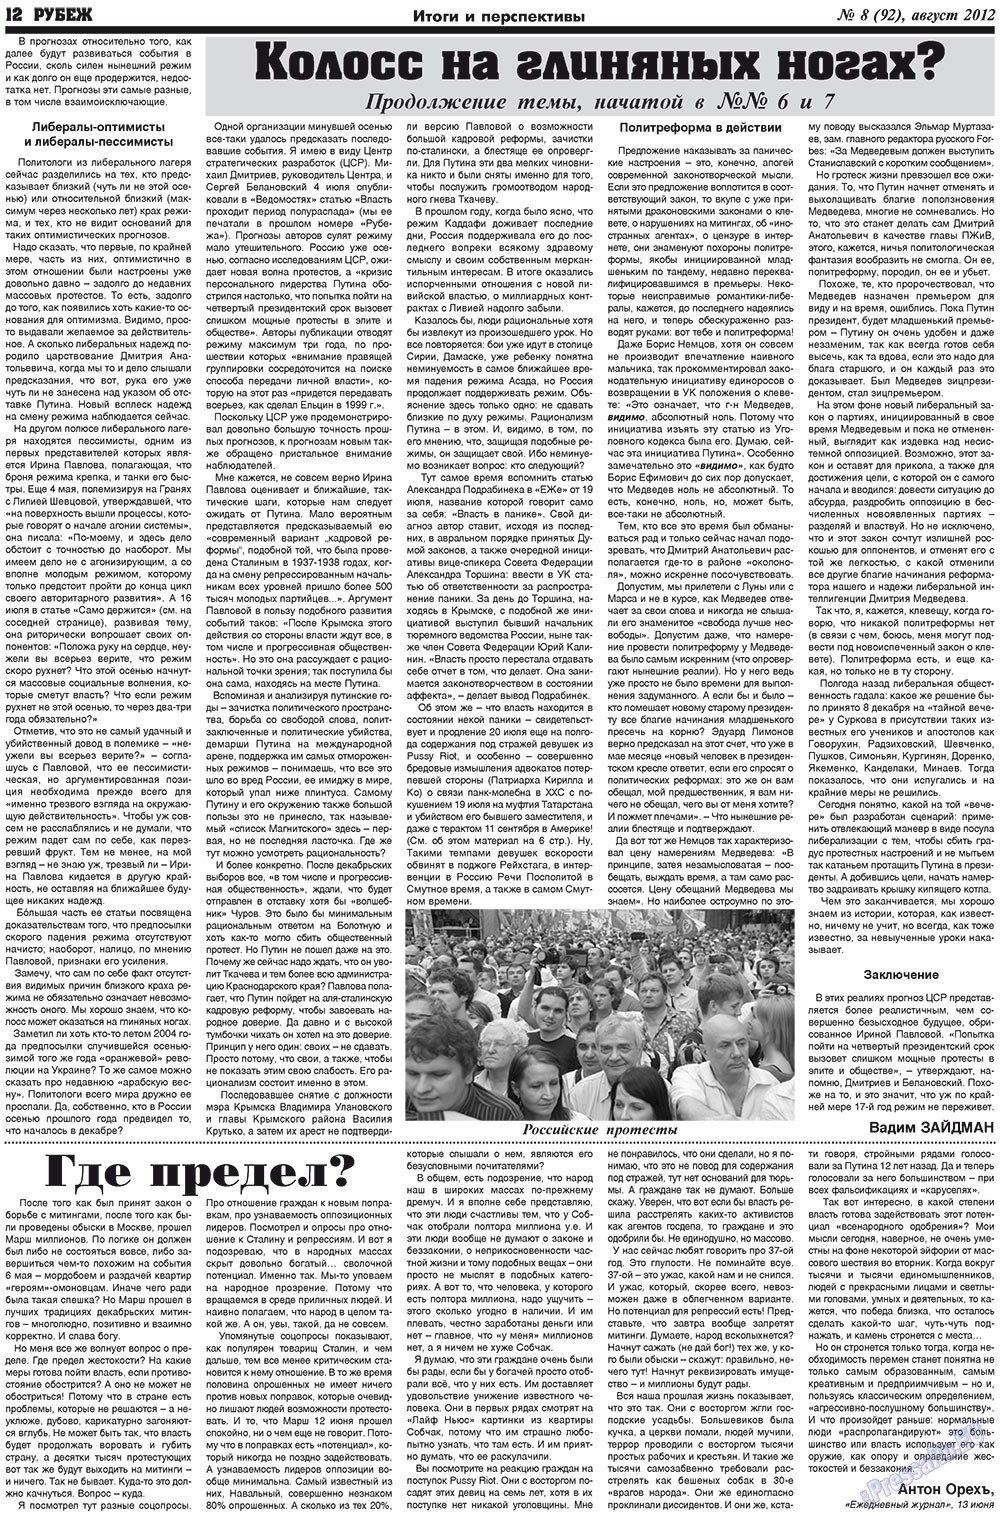 Рубеж, газета. 2012 №8 стр.12